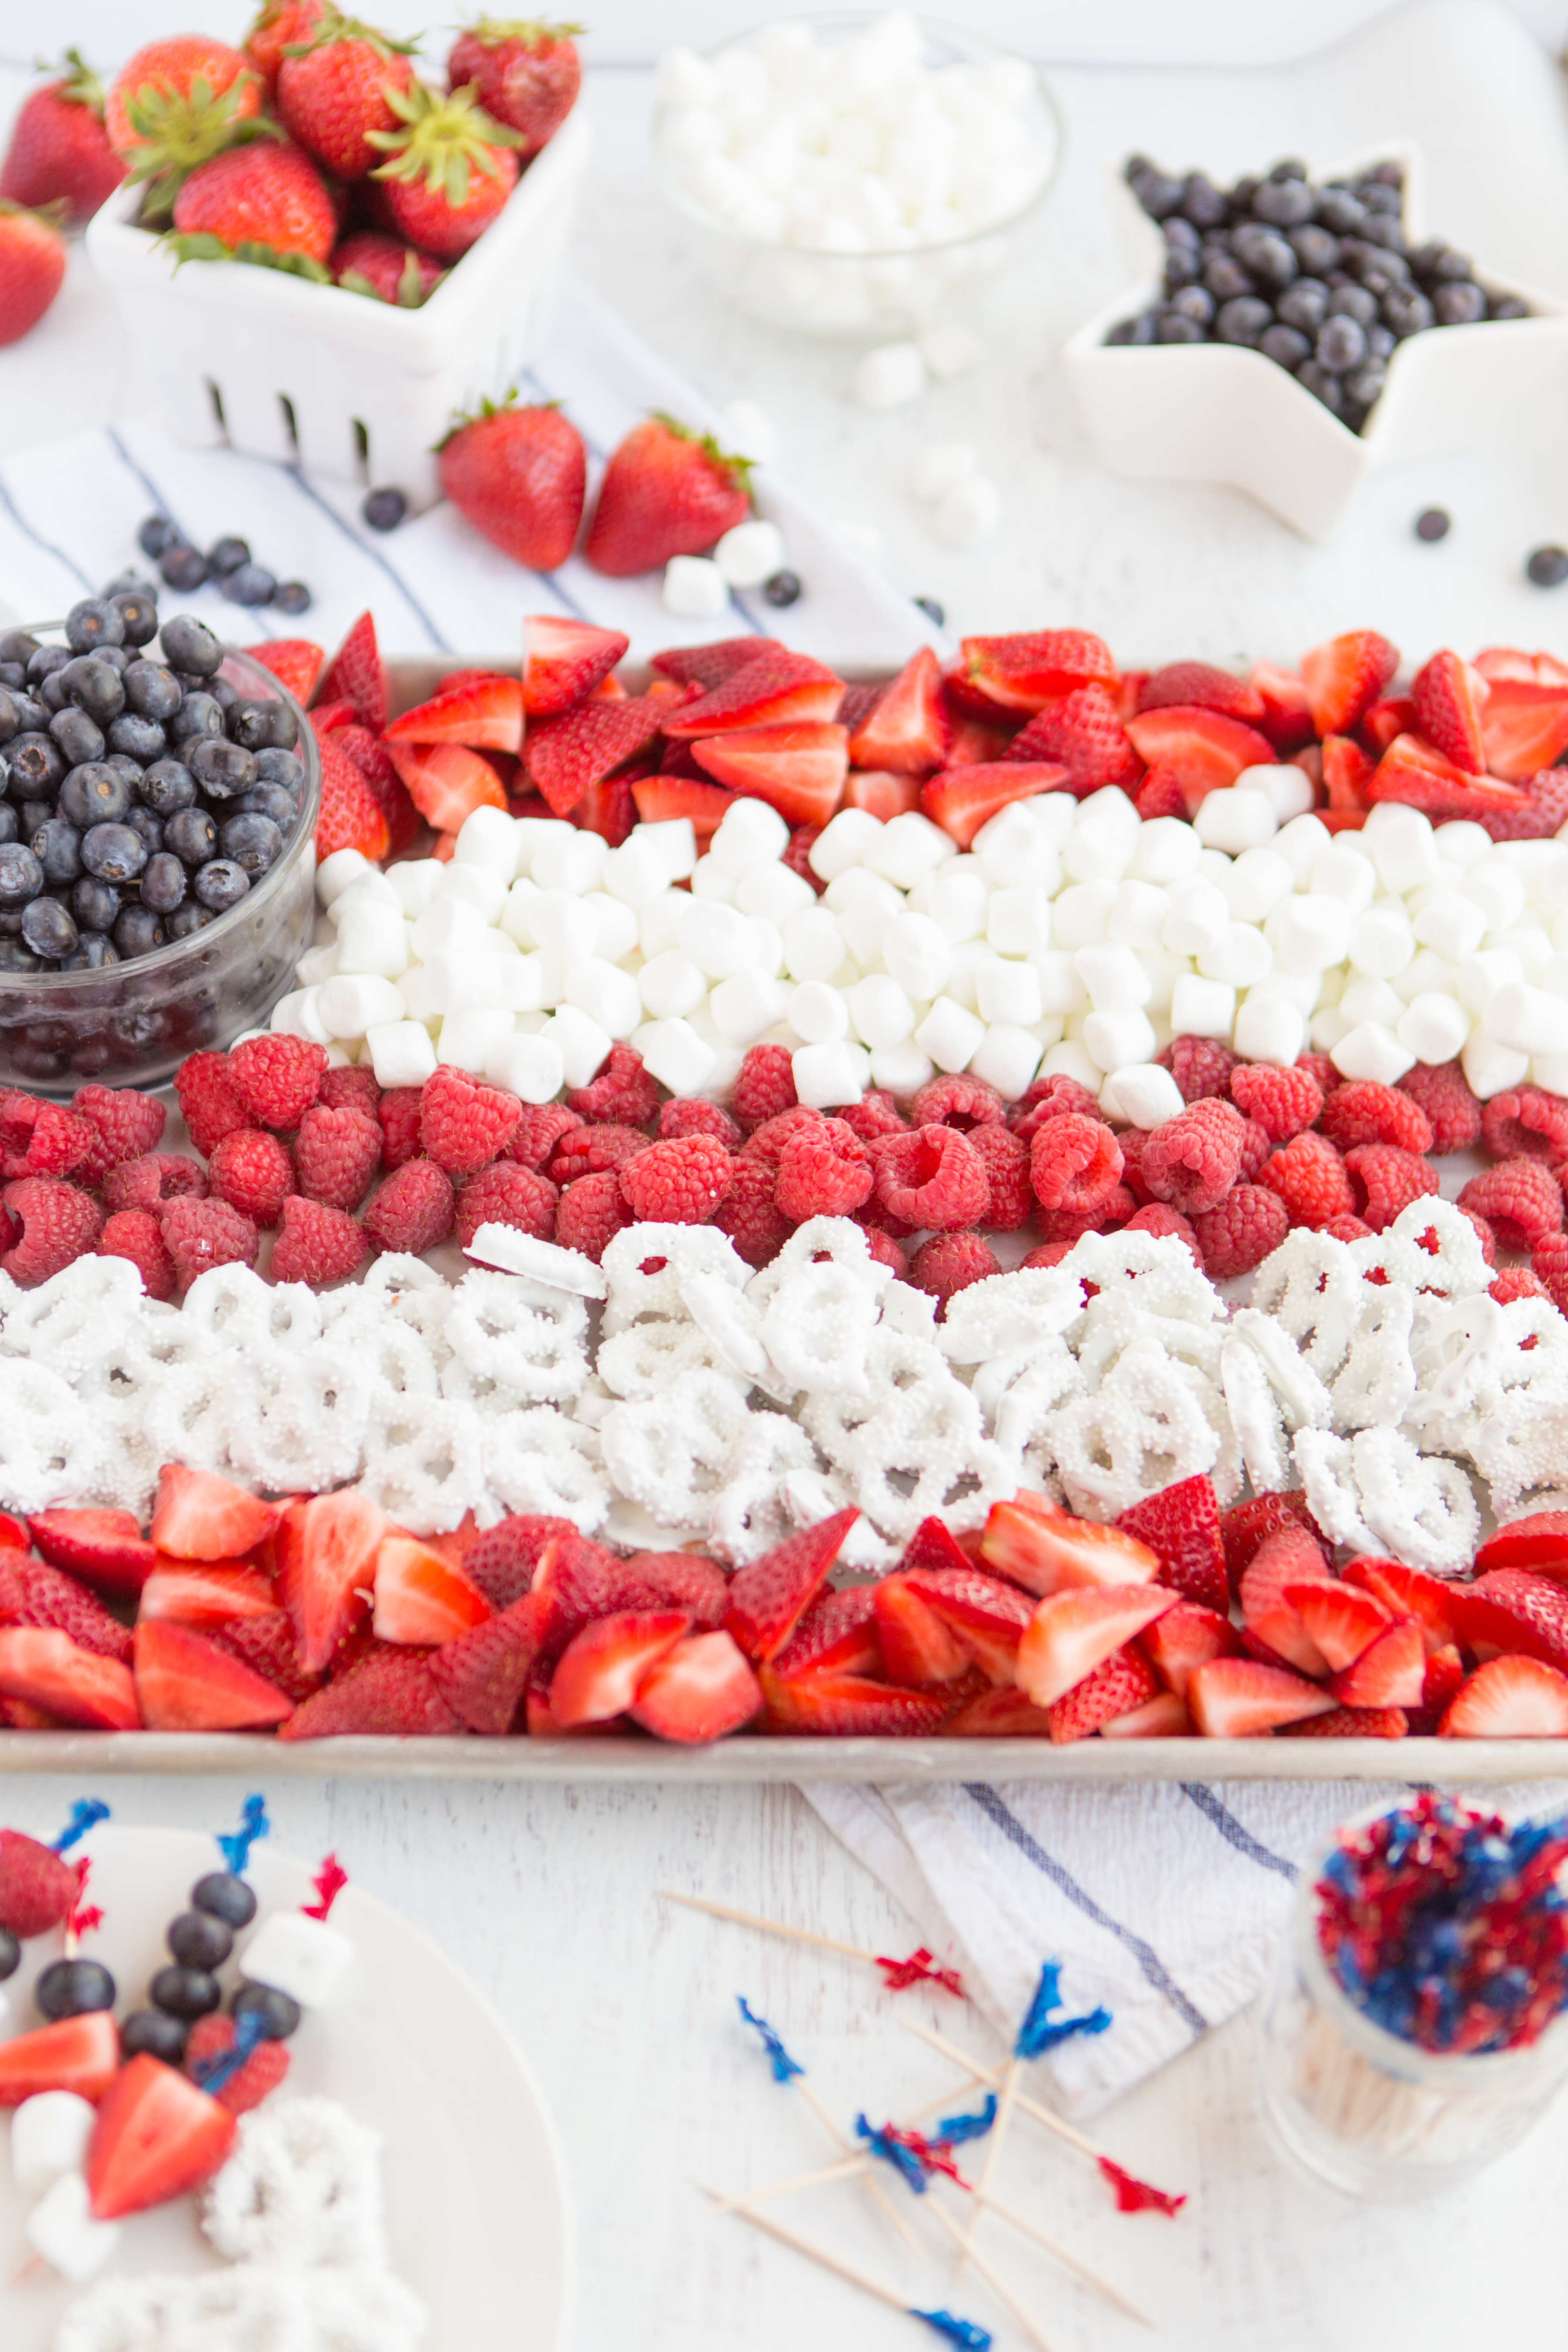 American Flag Fruit Tray